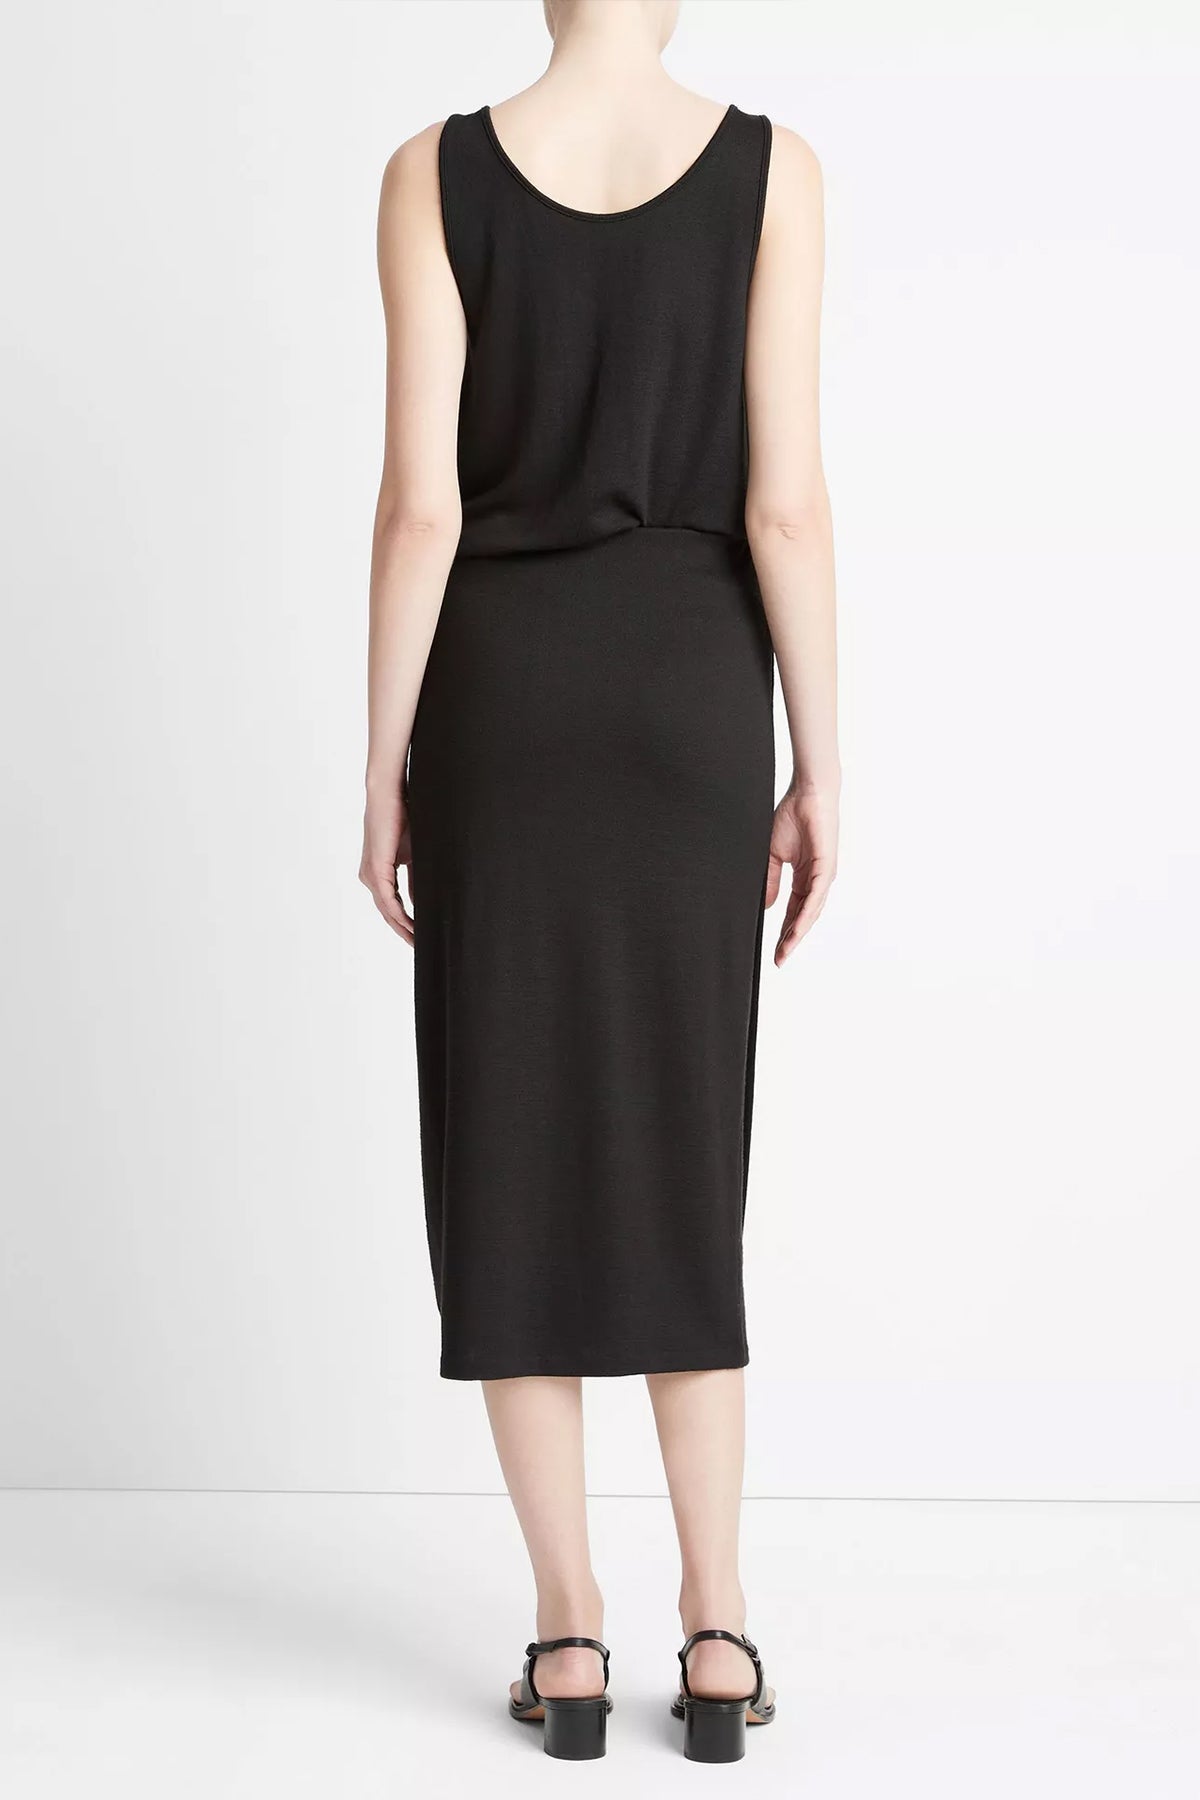 Side-Drape Skirt in Black - shop-olivia.com